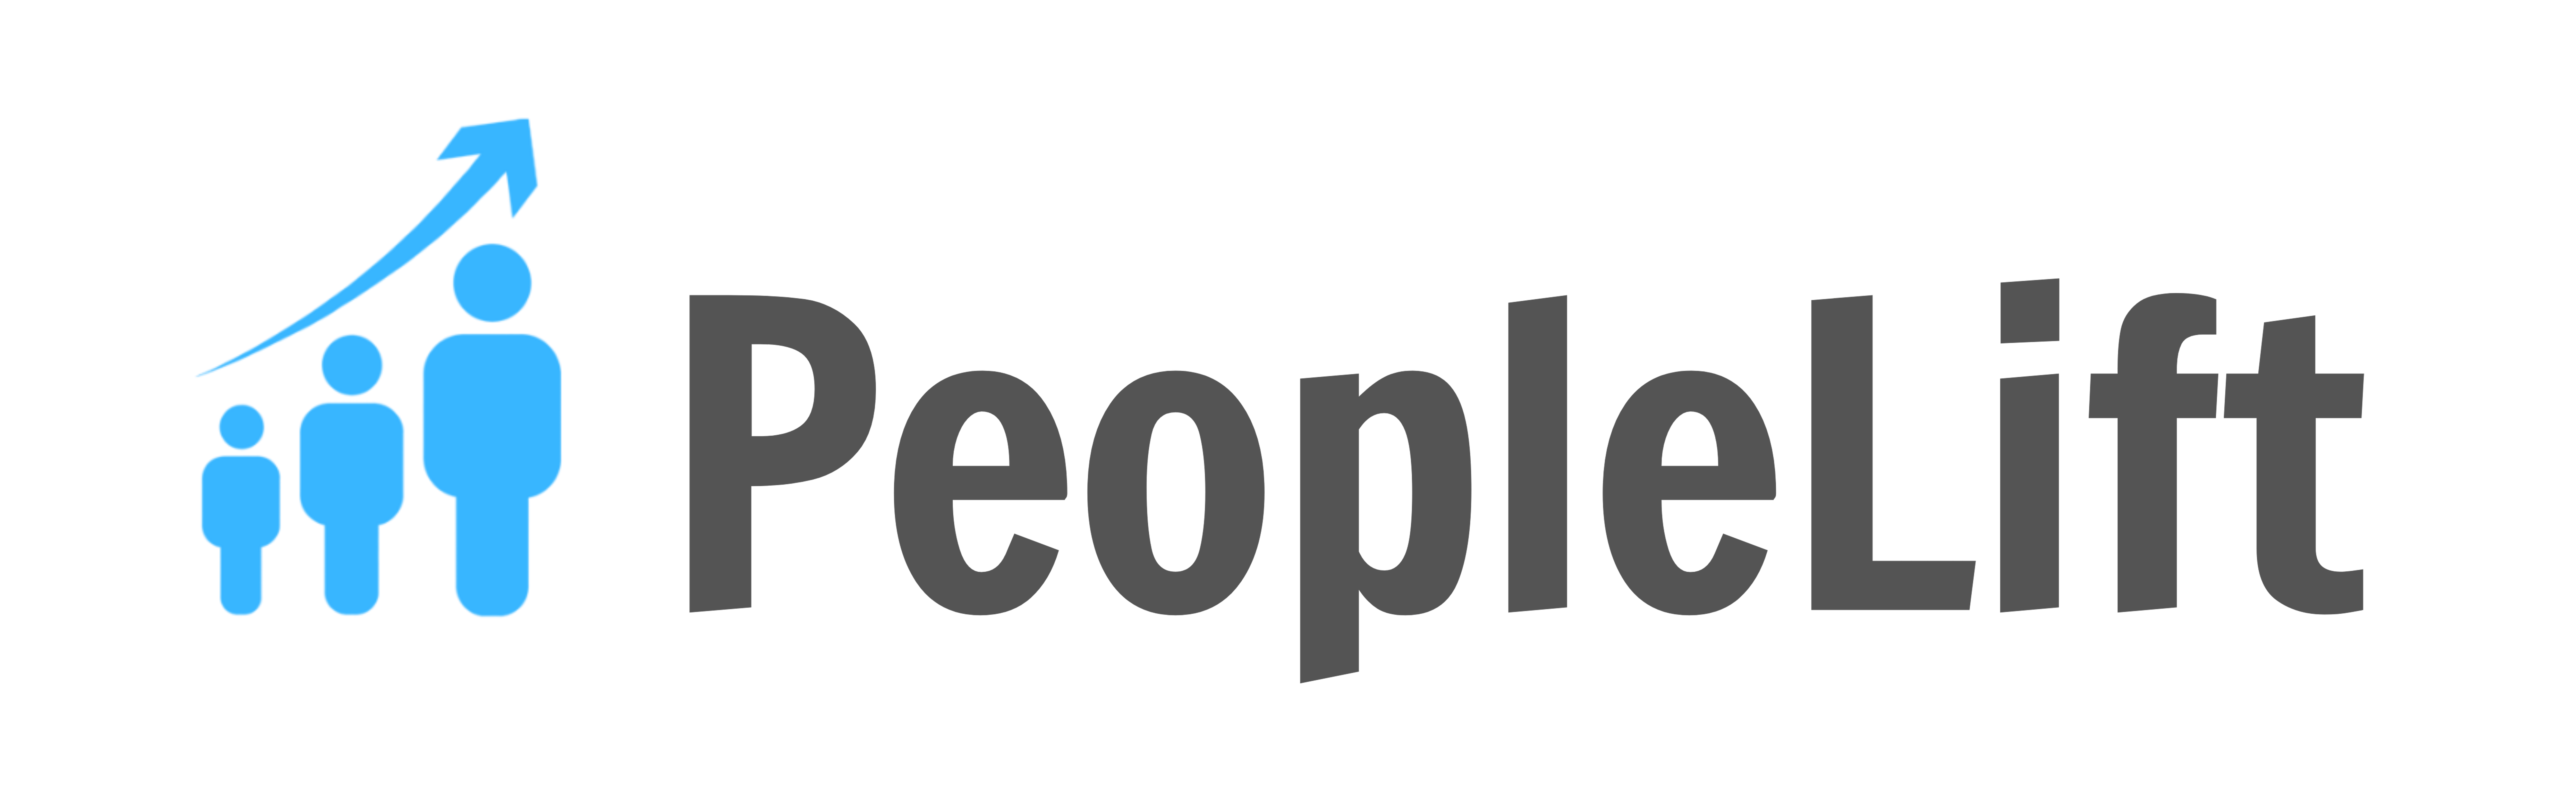 PeopleLift Logo